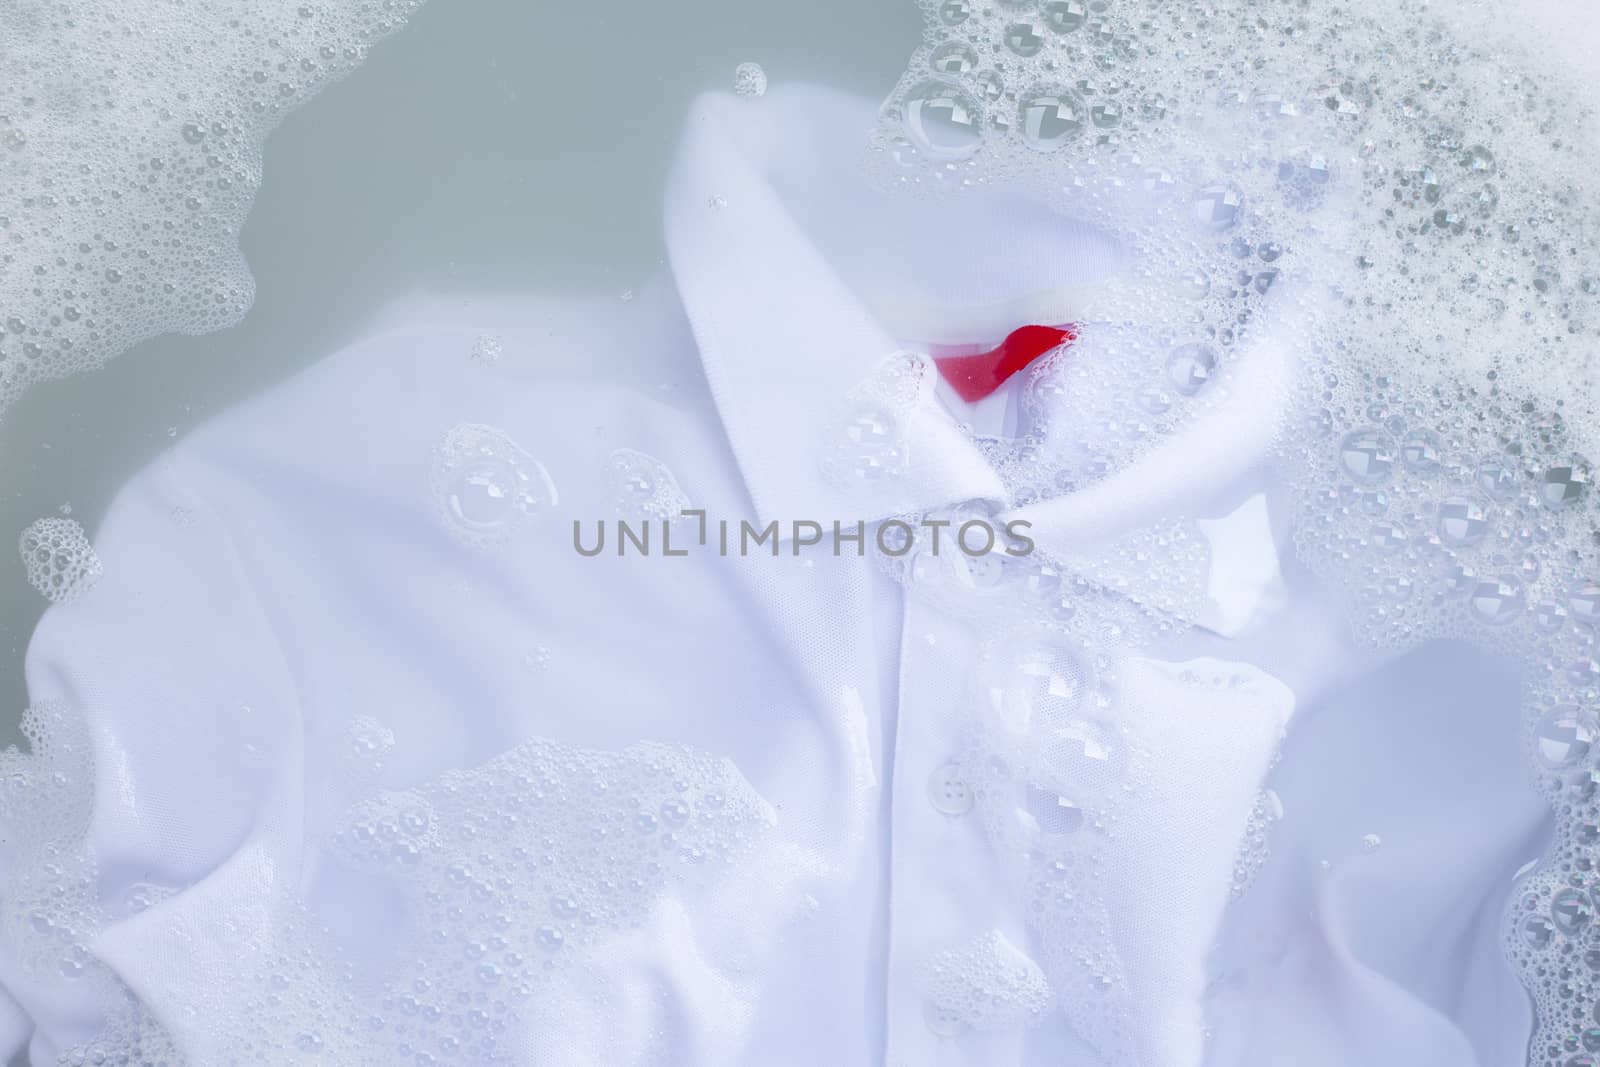 Soak a cloth before washing, white polo shirt. Top view